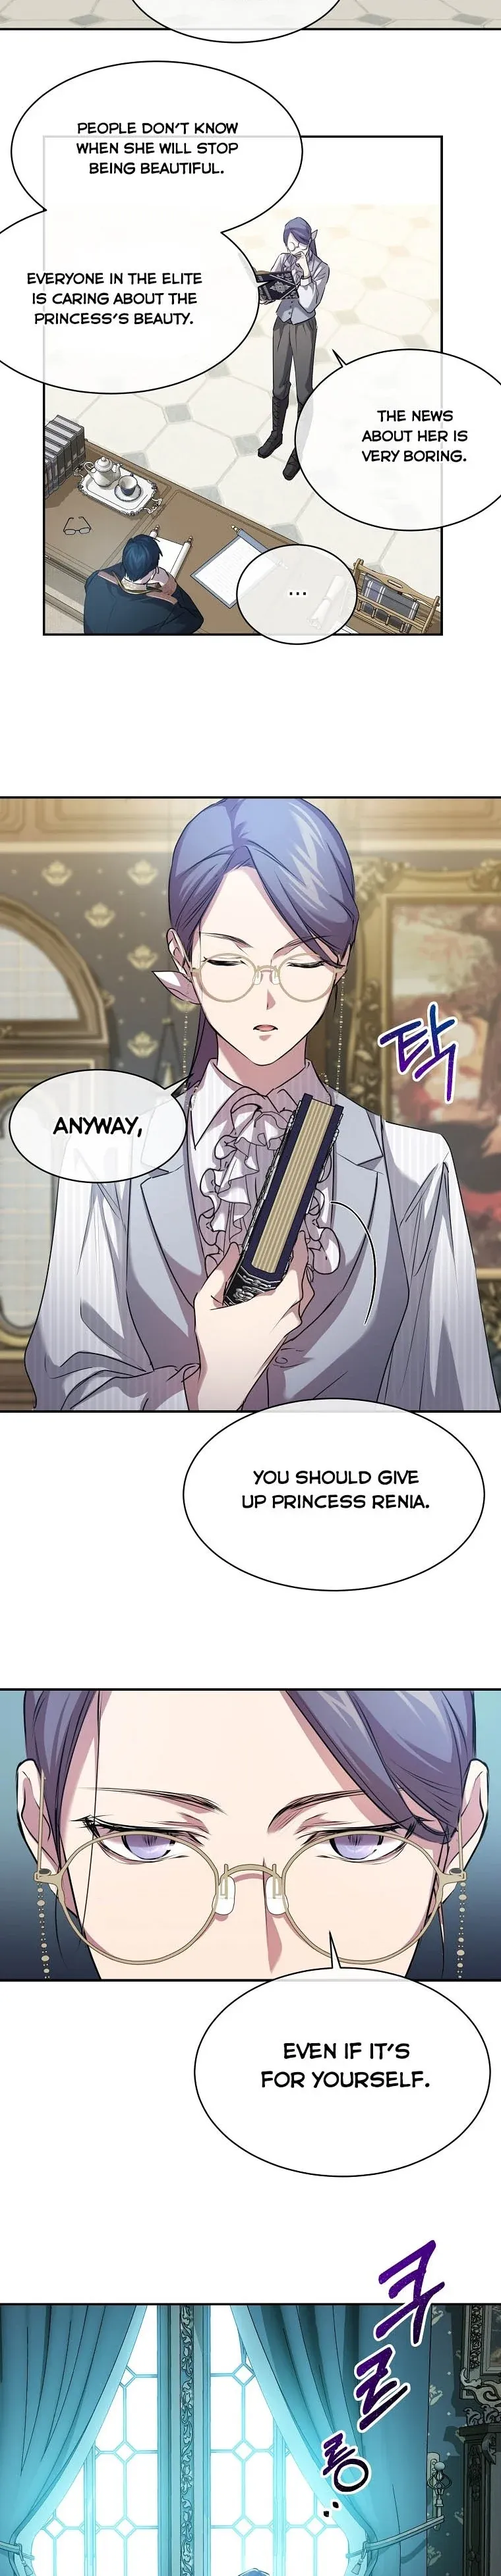 Crazy Princess Renia Chapter 2 - Page 5